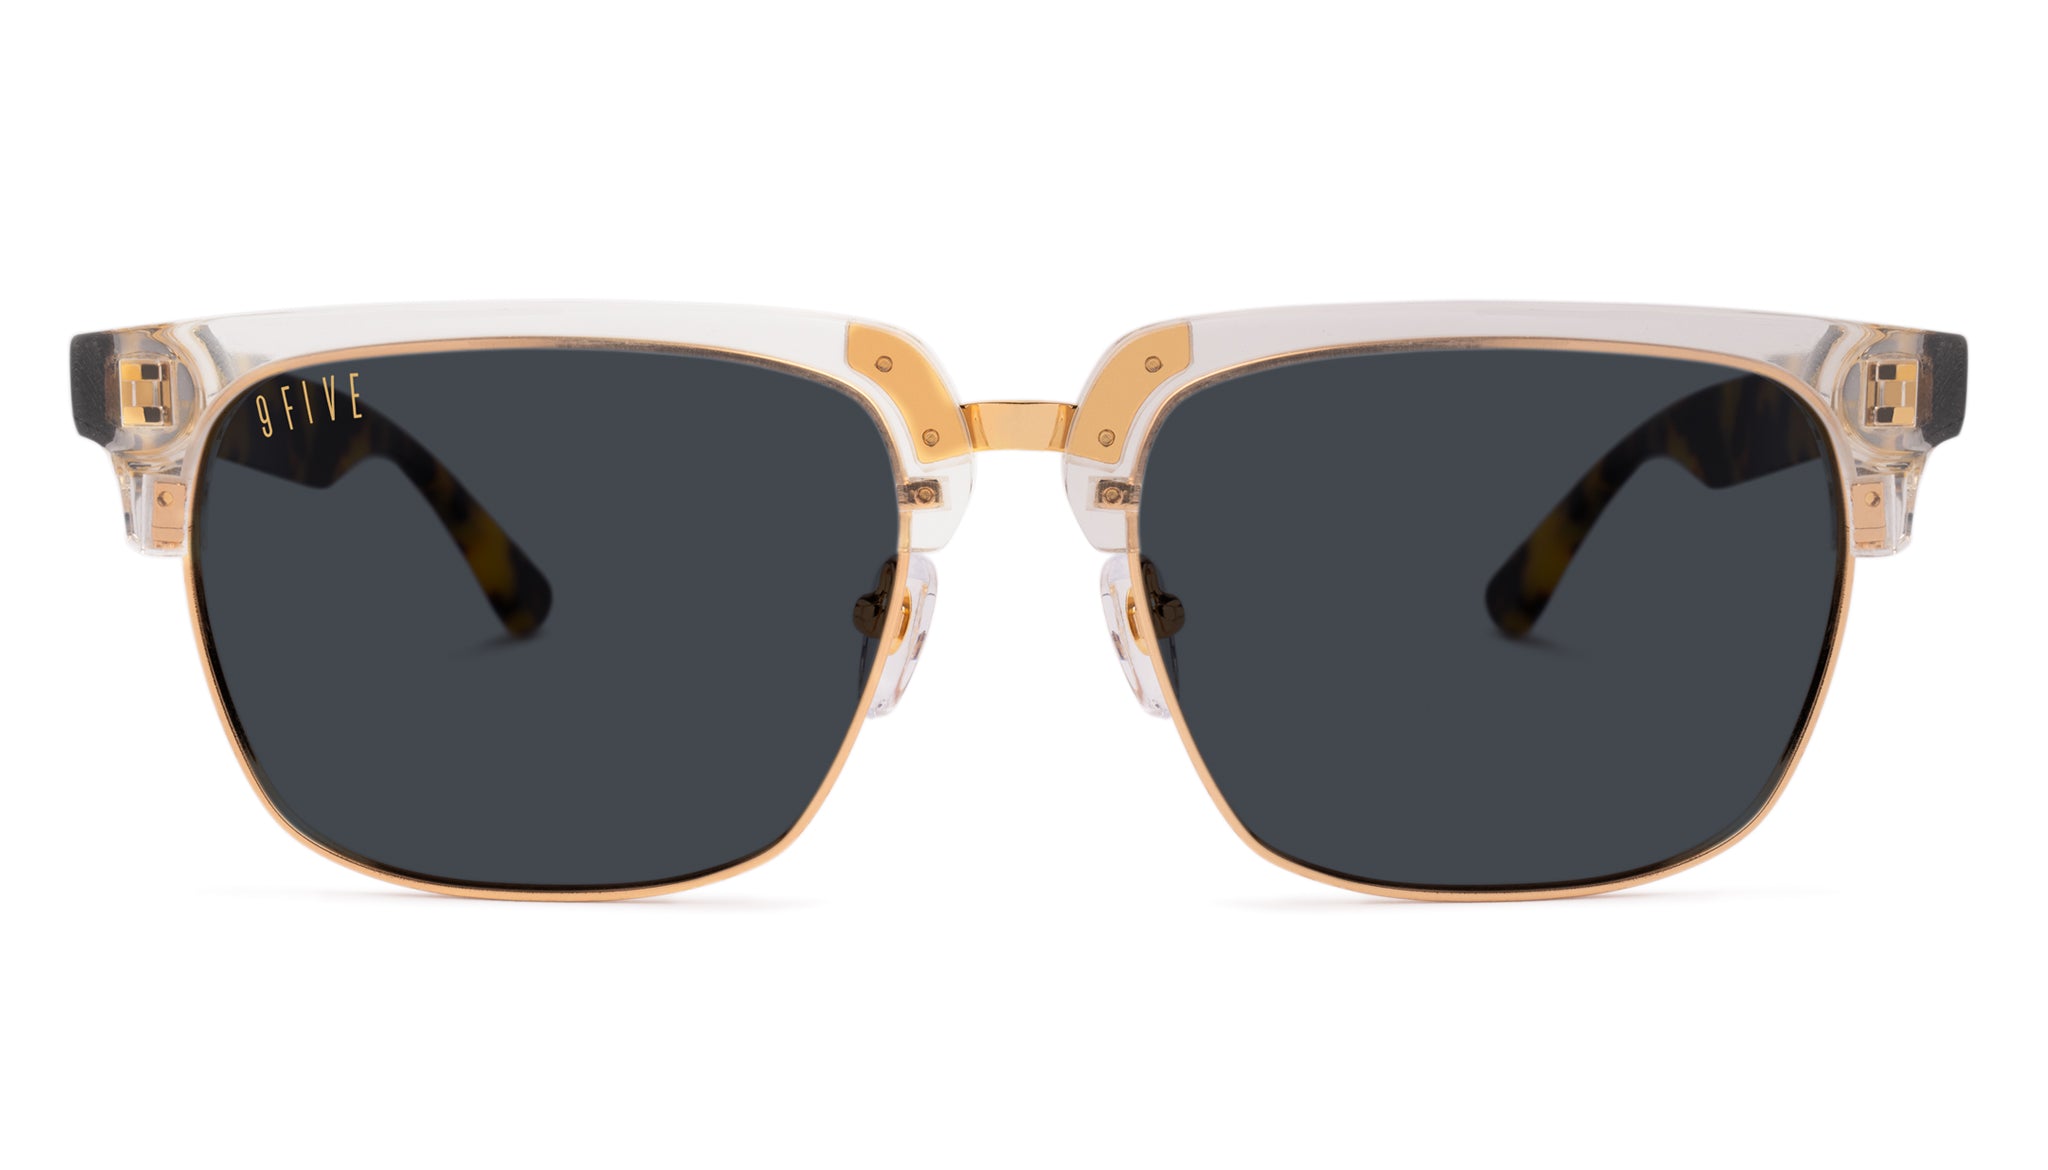 9FIVE Belmont Oasis XL Sunglasses